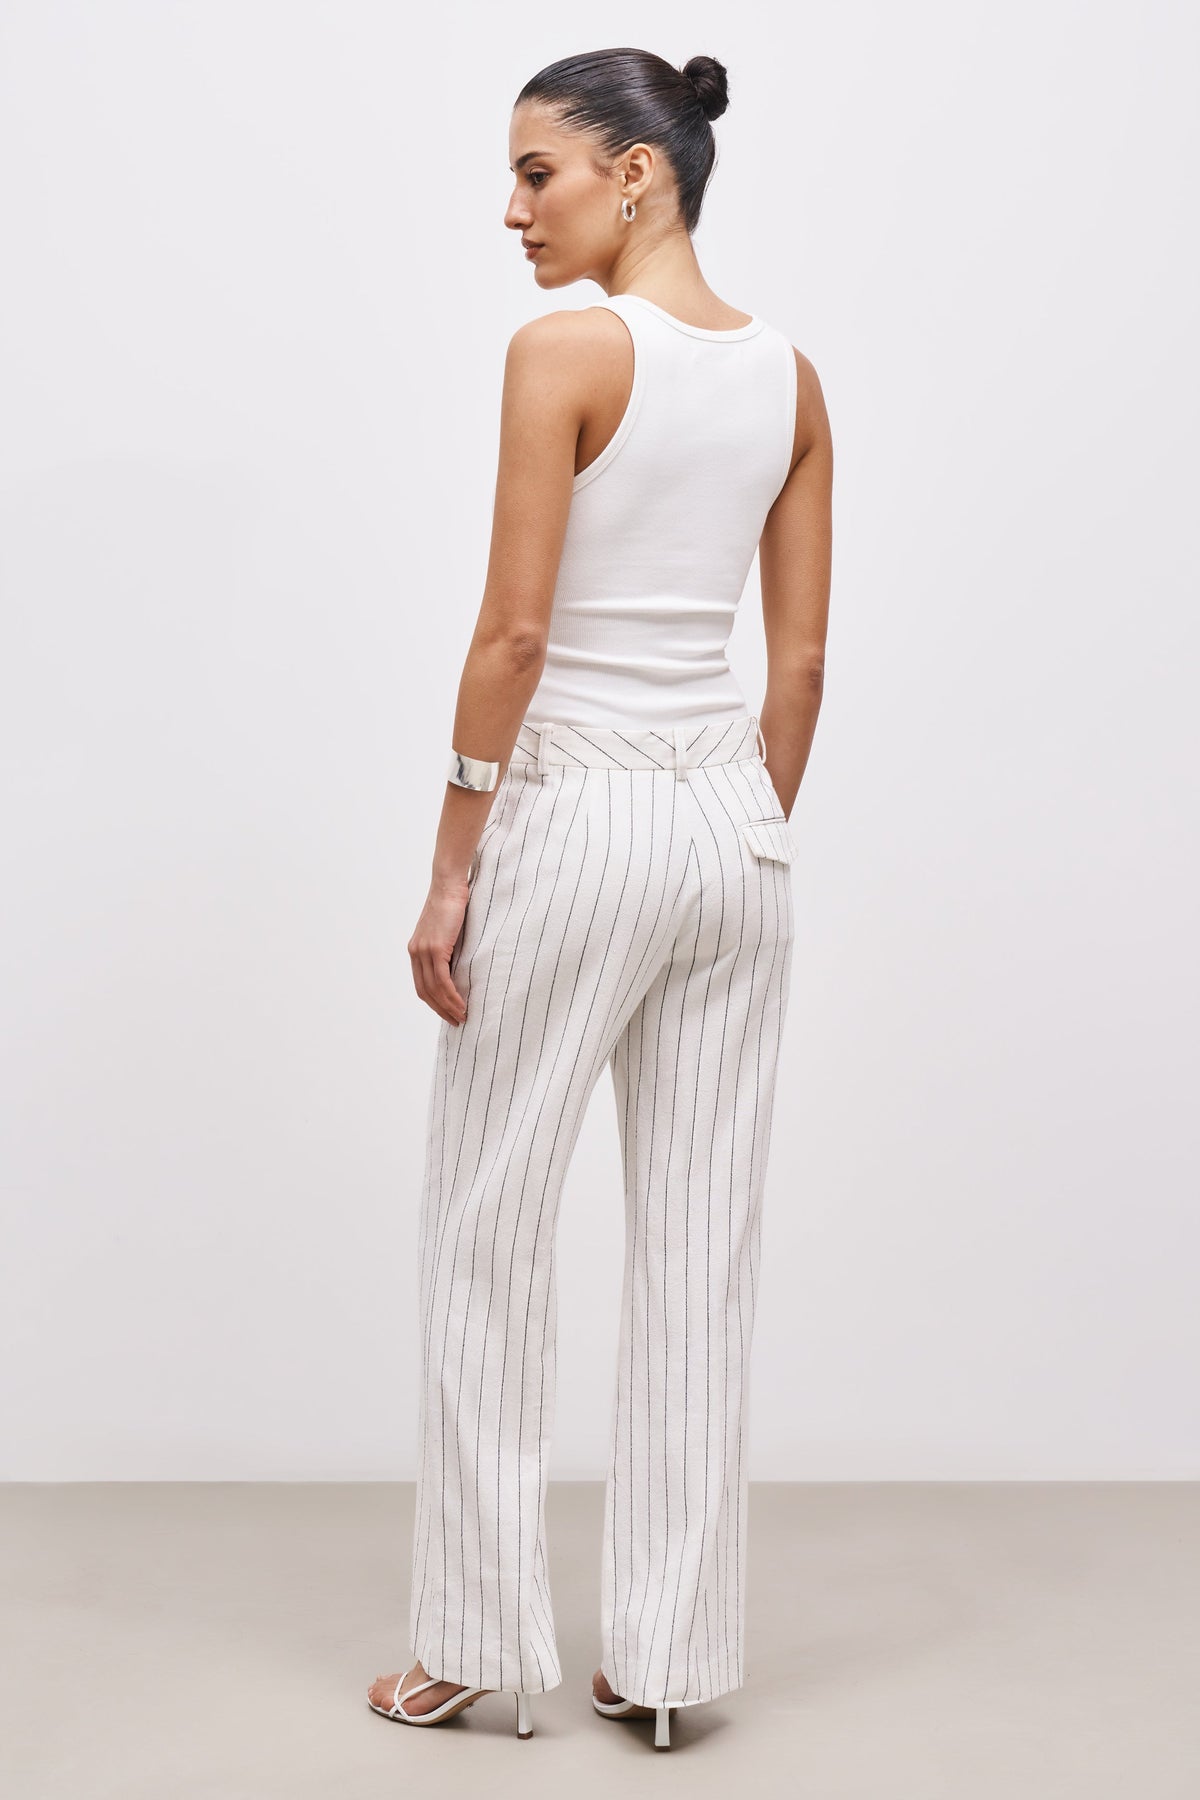 Tailored Linen Trousers - Cream/Black